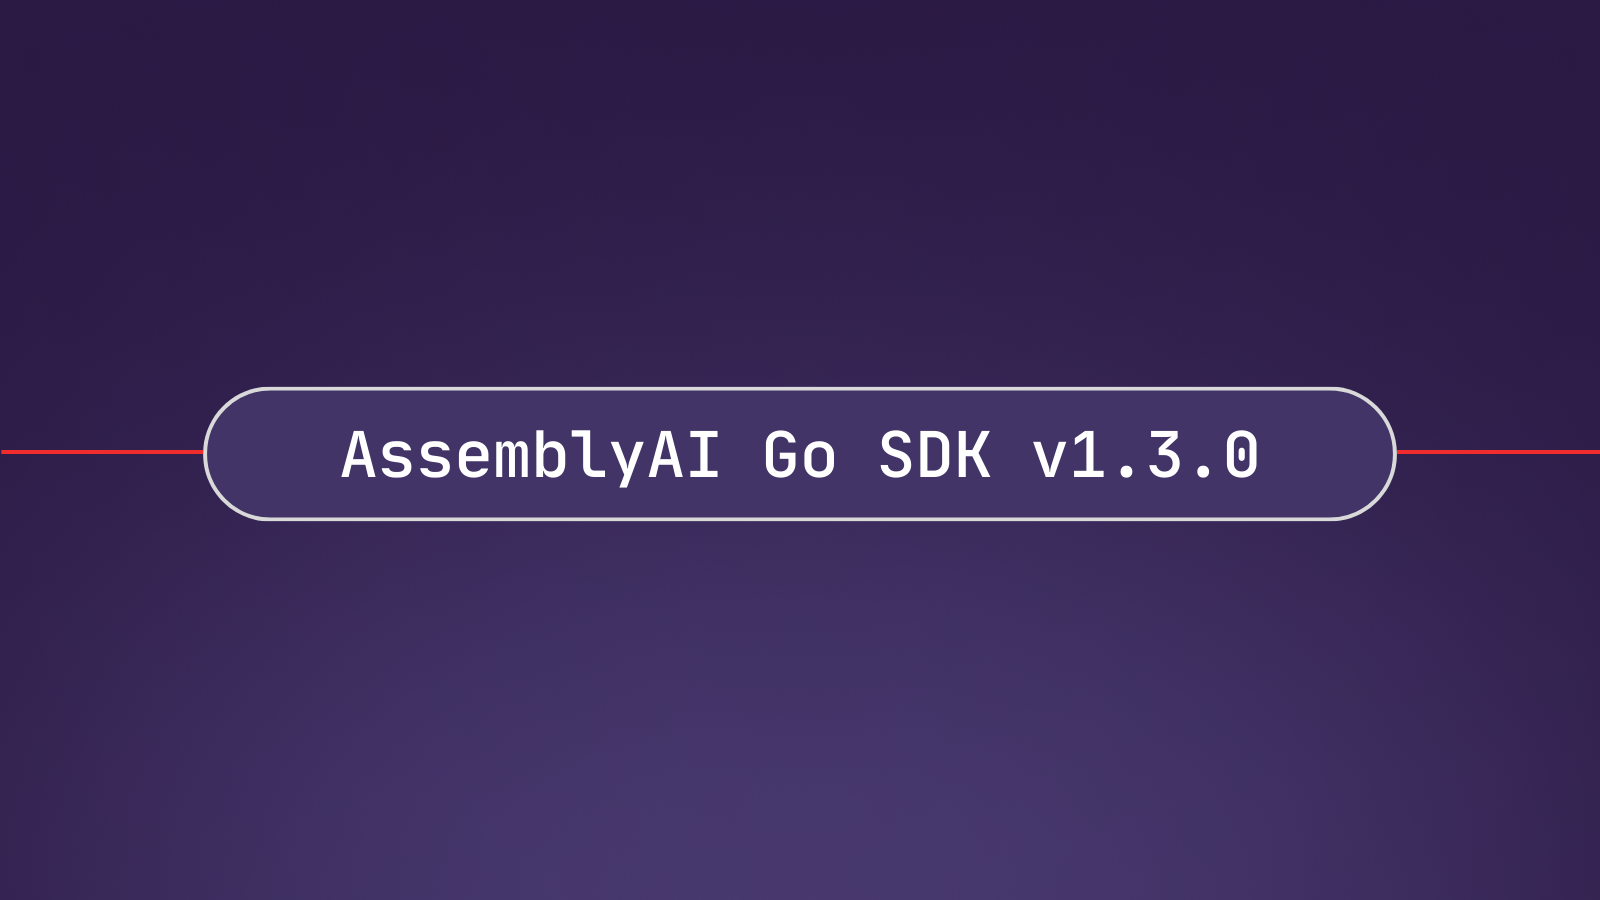 AssemblyAI Go SDK v1.3.0: Utterance Detection and Word Search